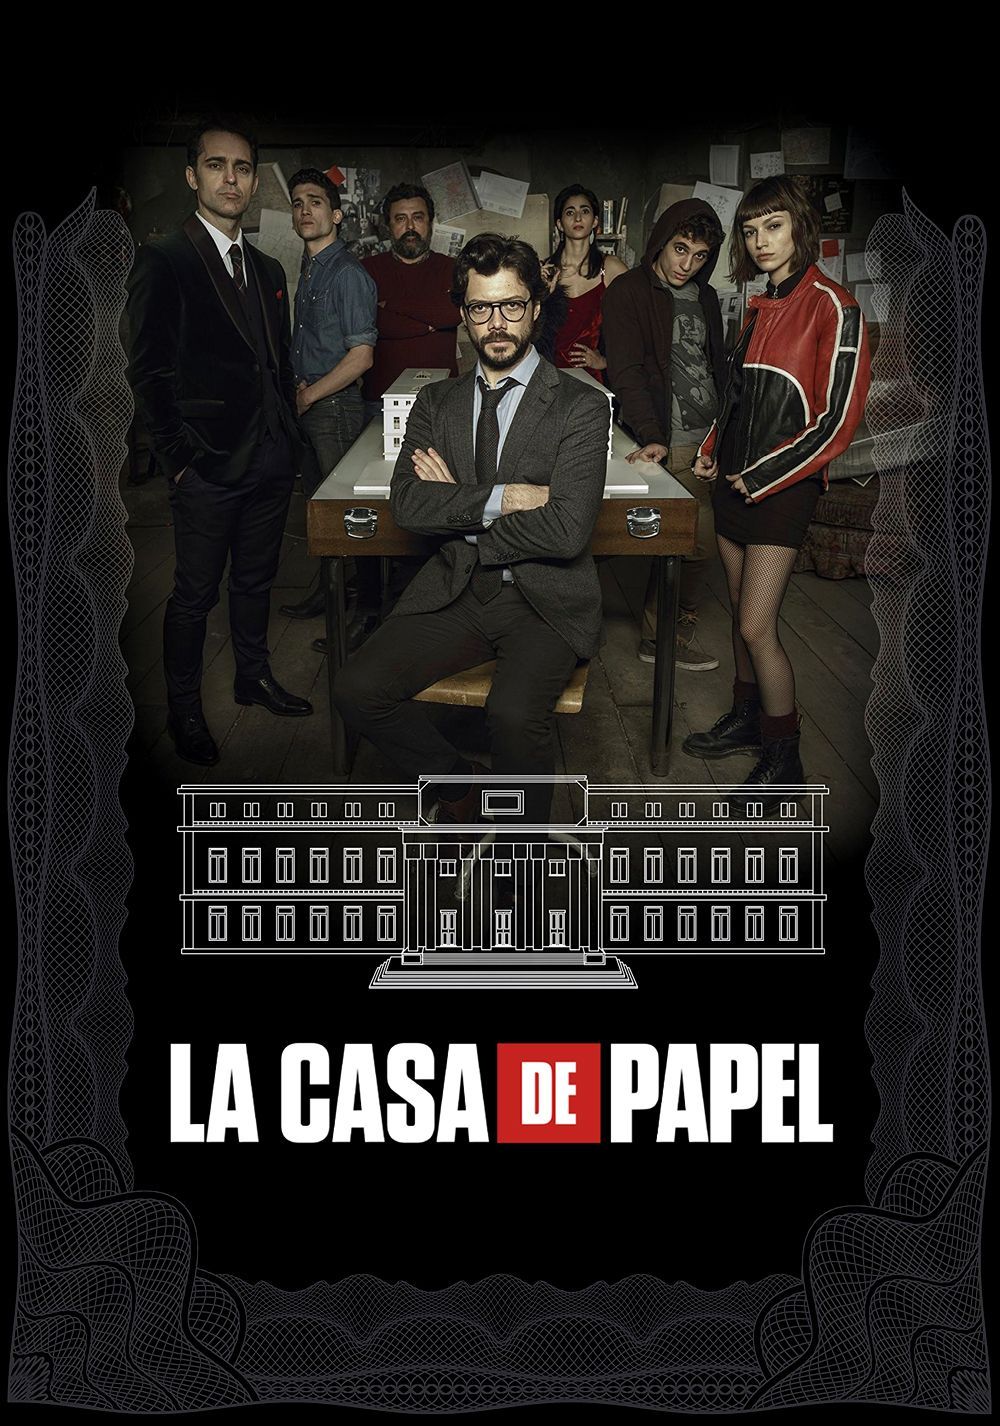 Best Casa De Papel [Money Heist] image. Netflix series